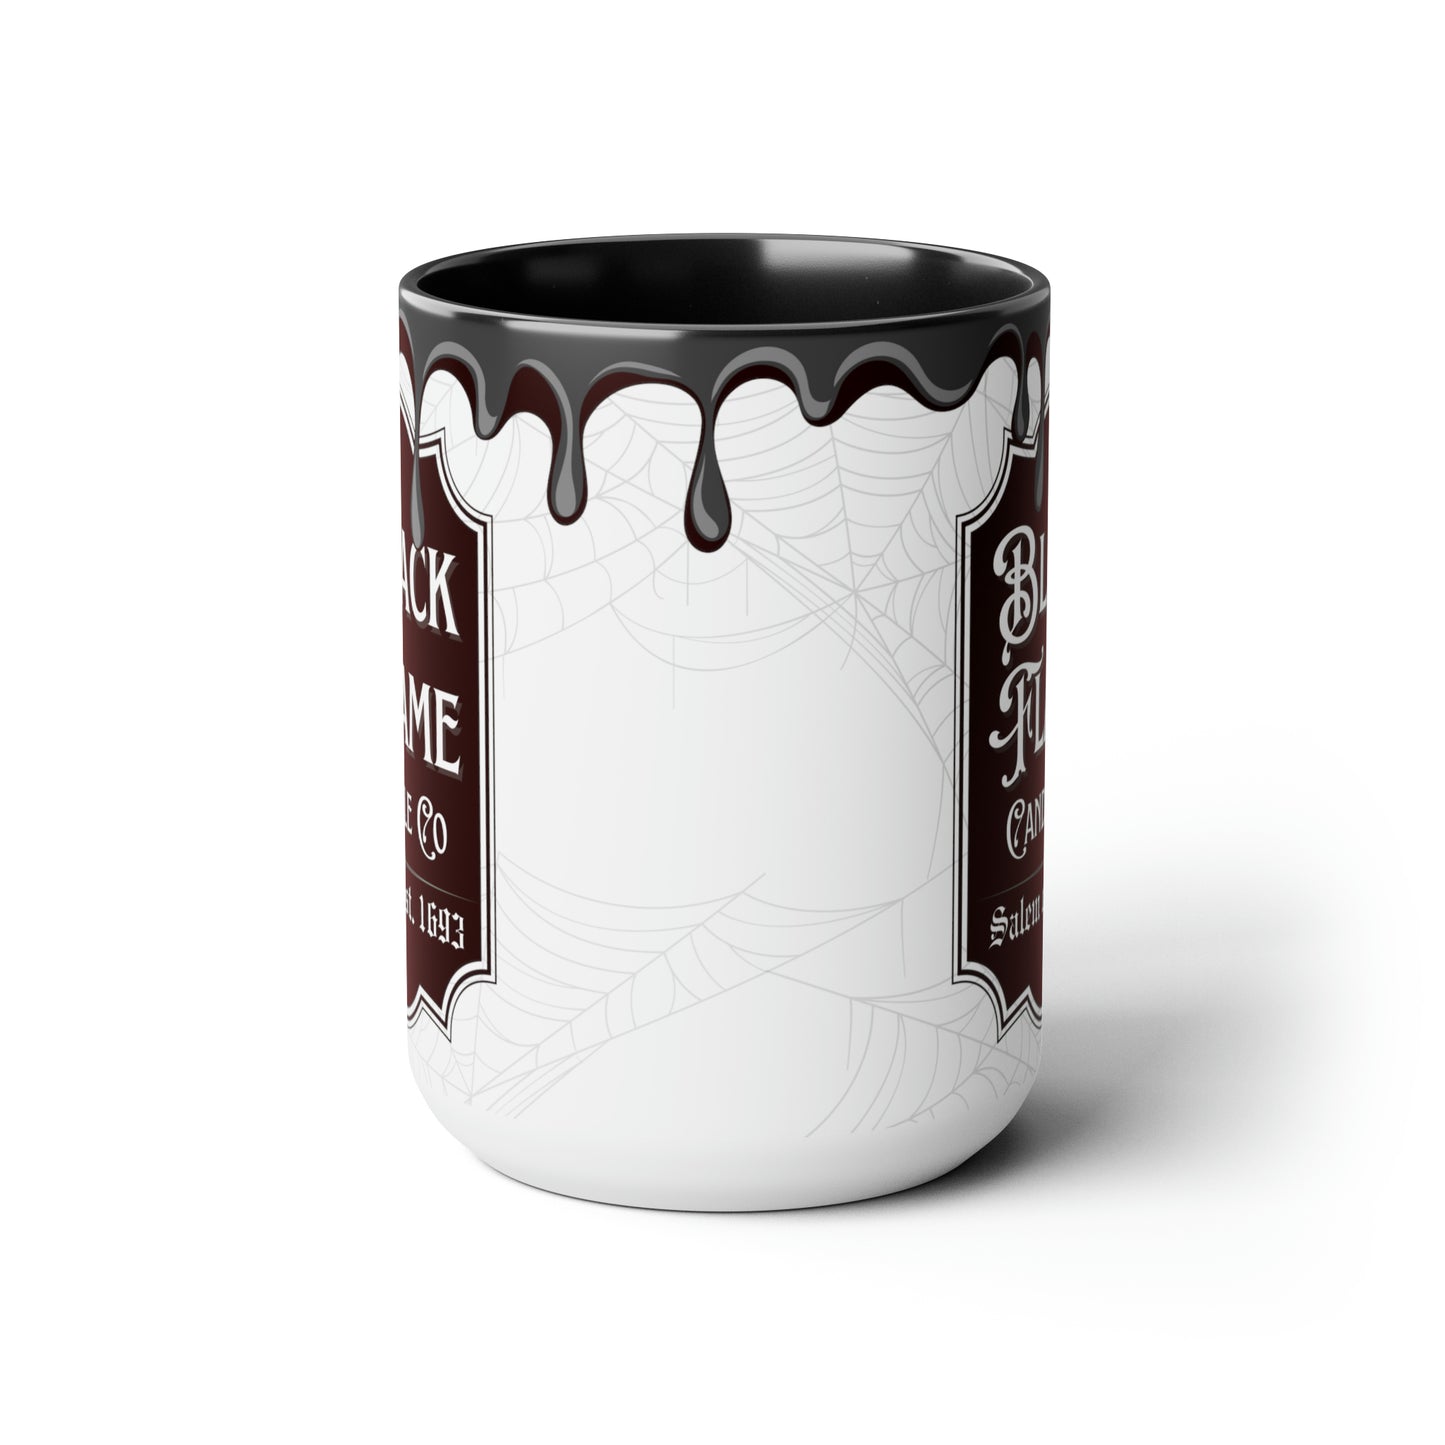 Black Flame Candle - Coffee Mug